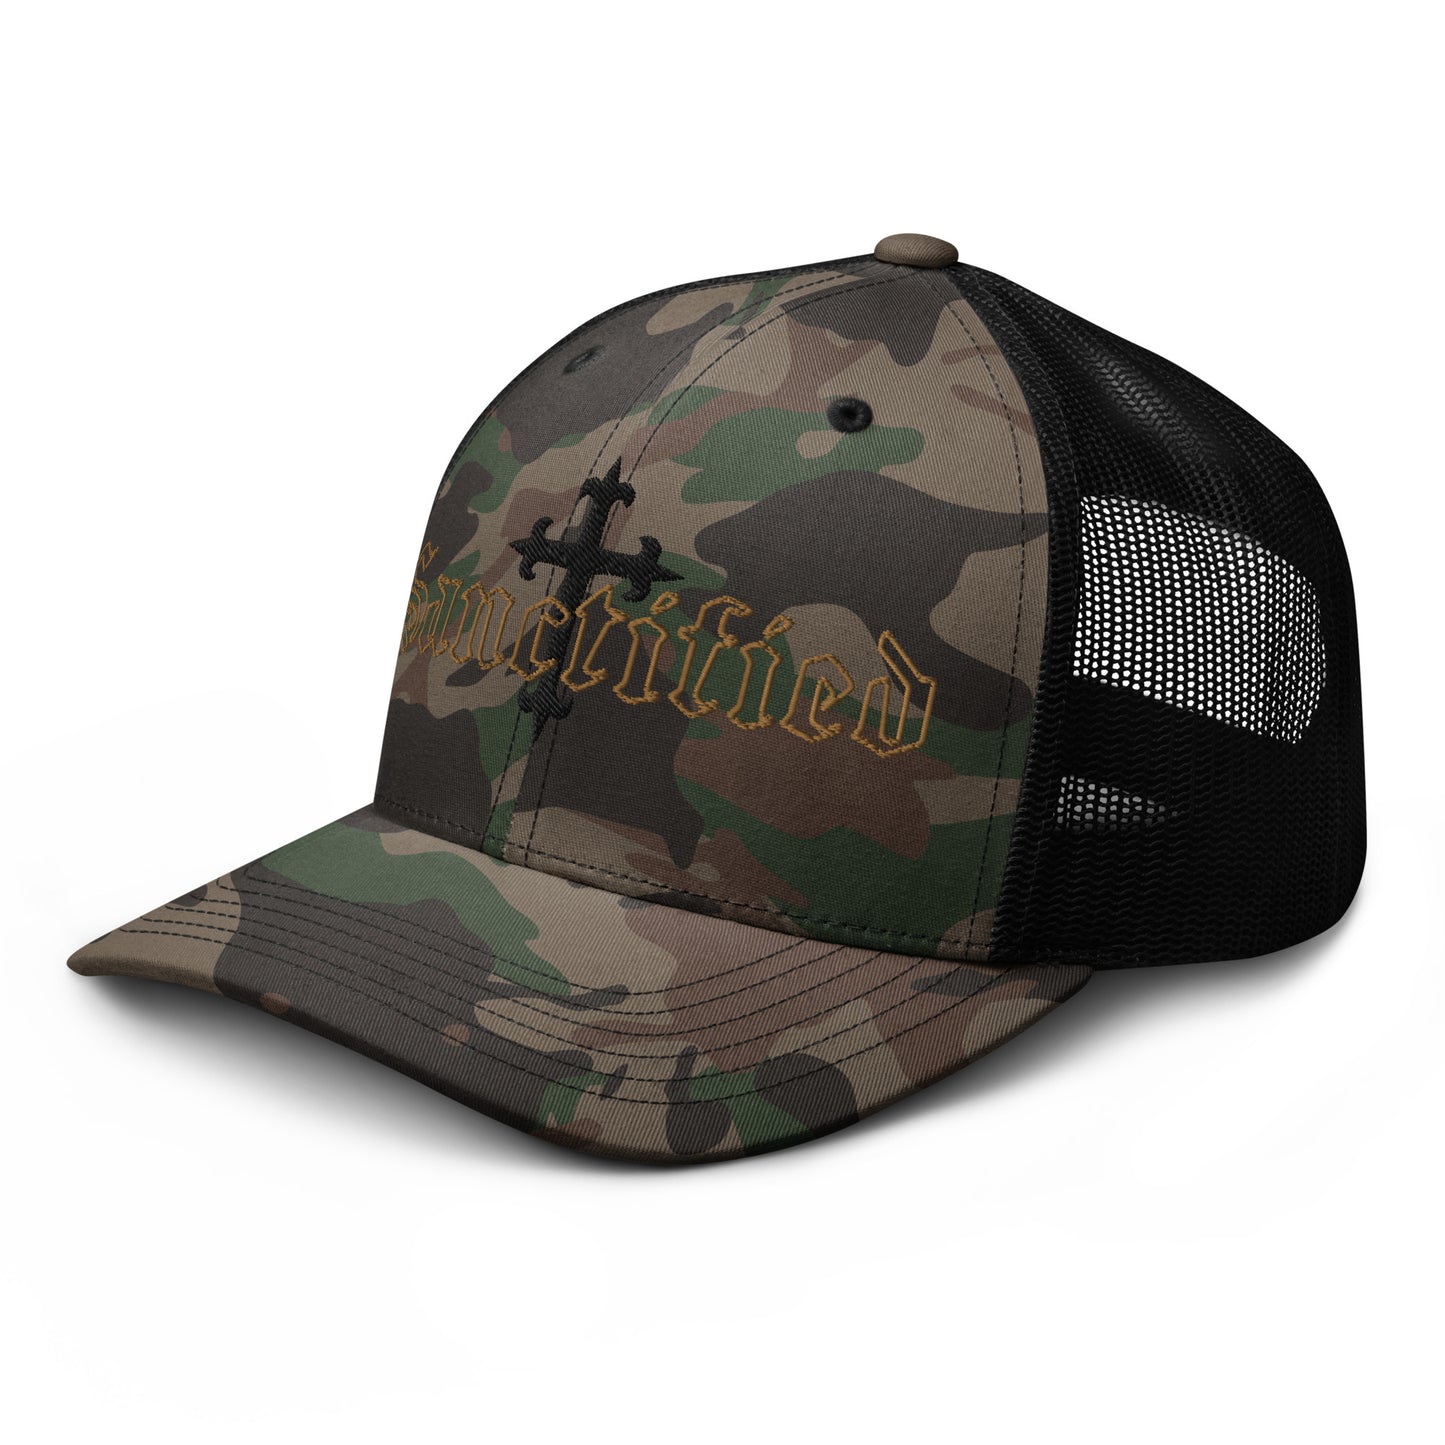 Sanctified- Camouflage trucker hat